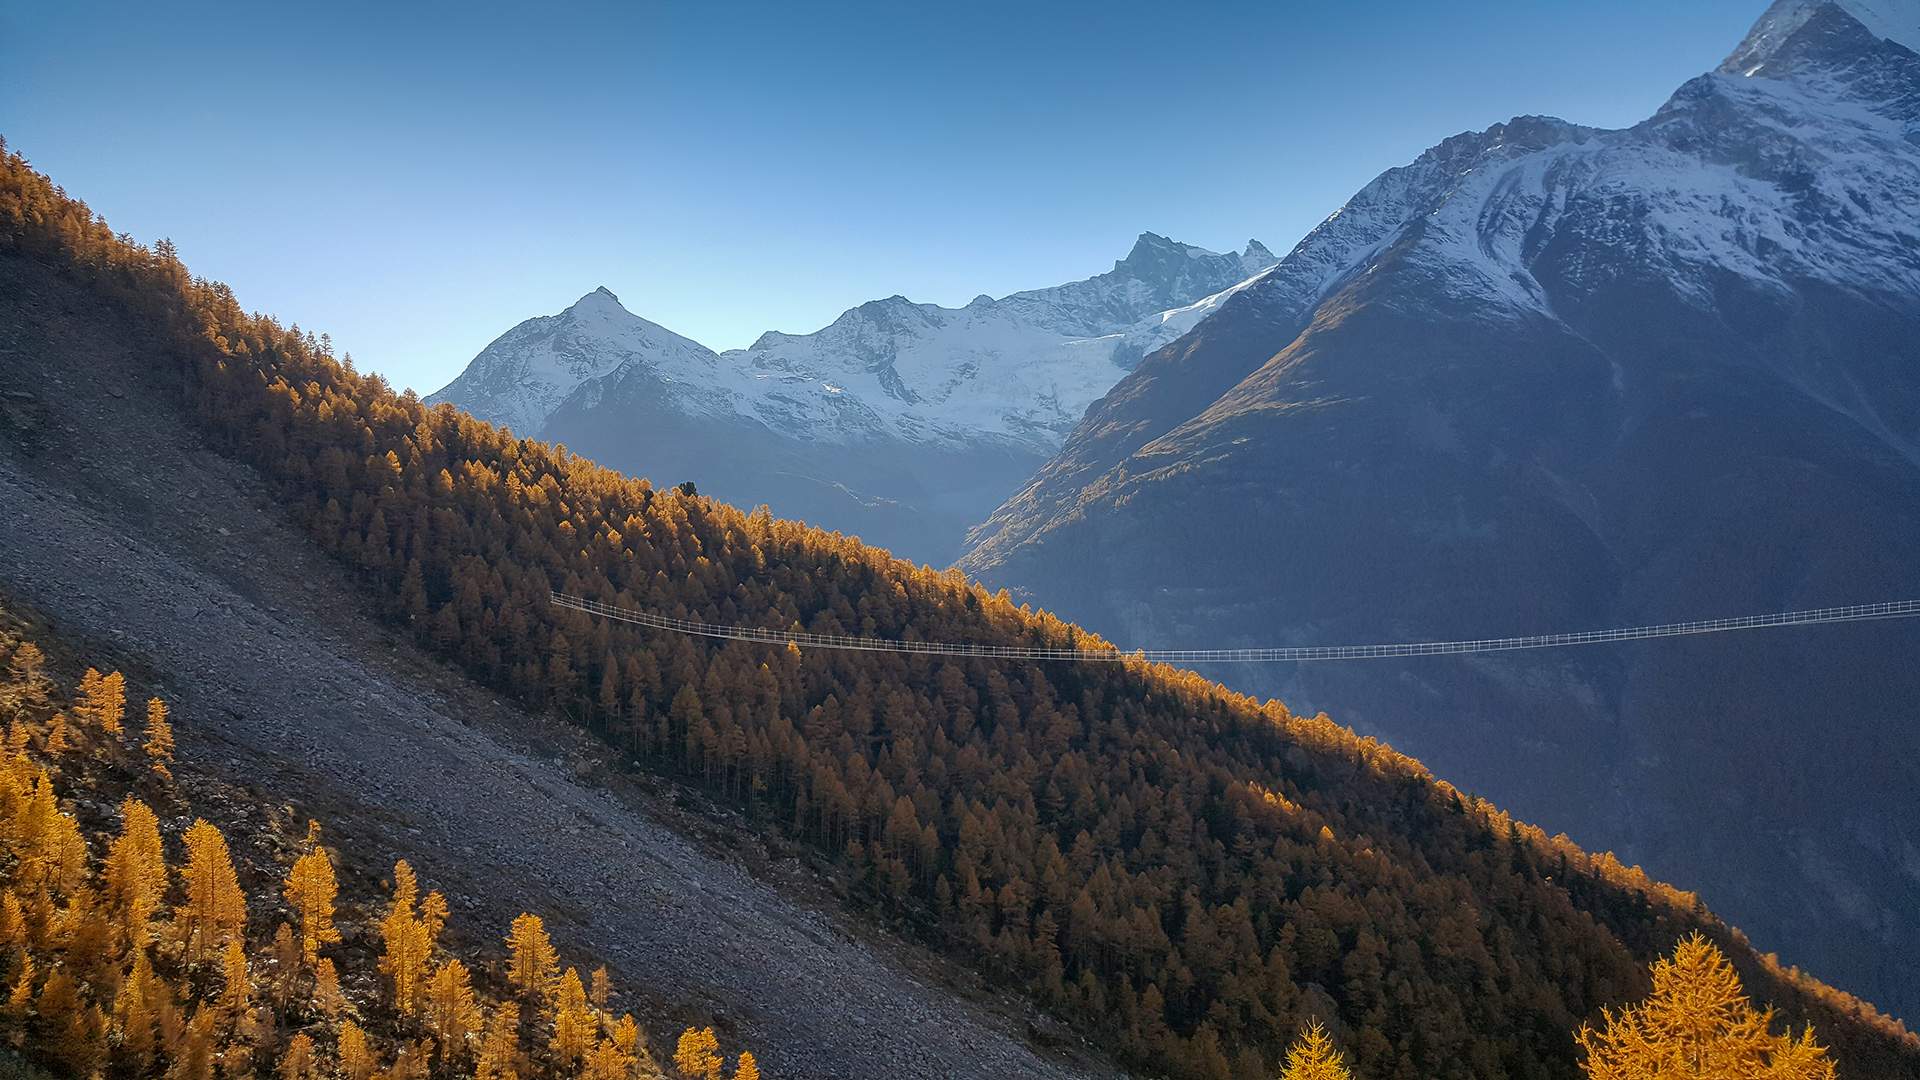 The World's Longest Suspension Bridge Has Opened in the Swiss Alps